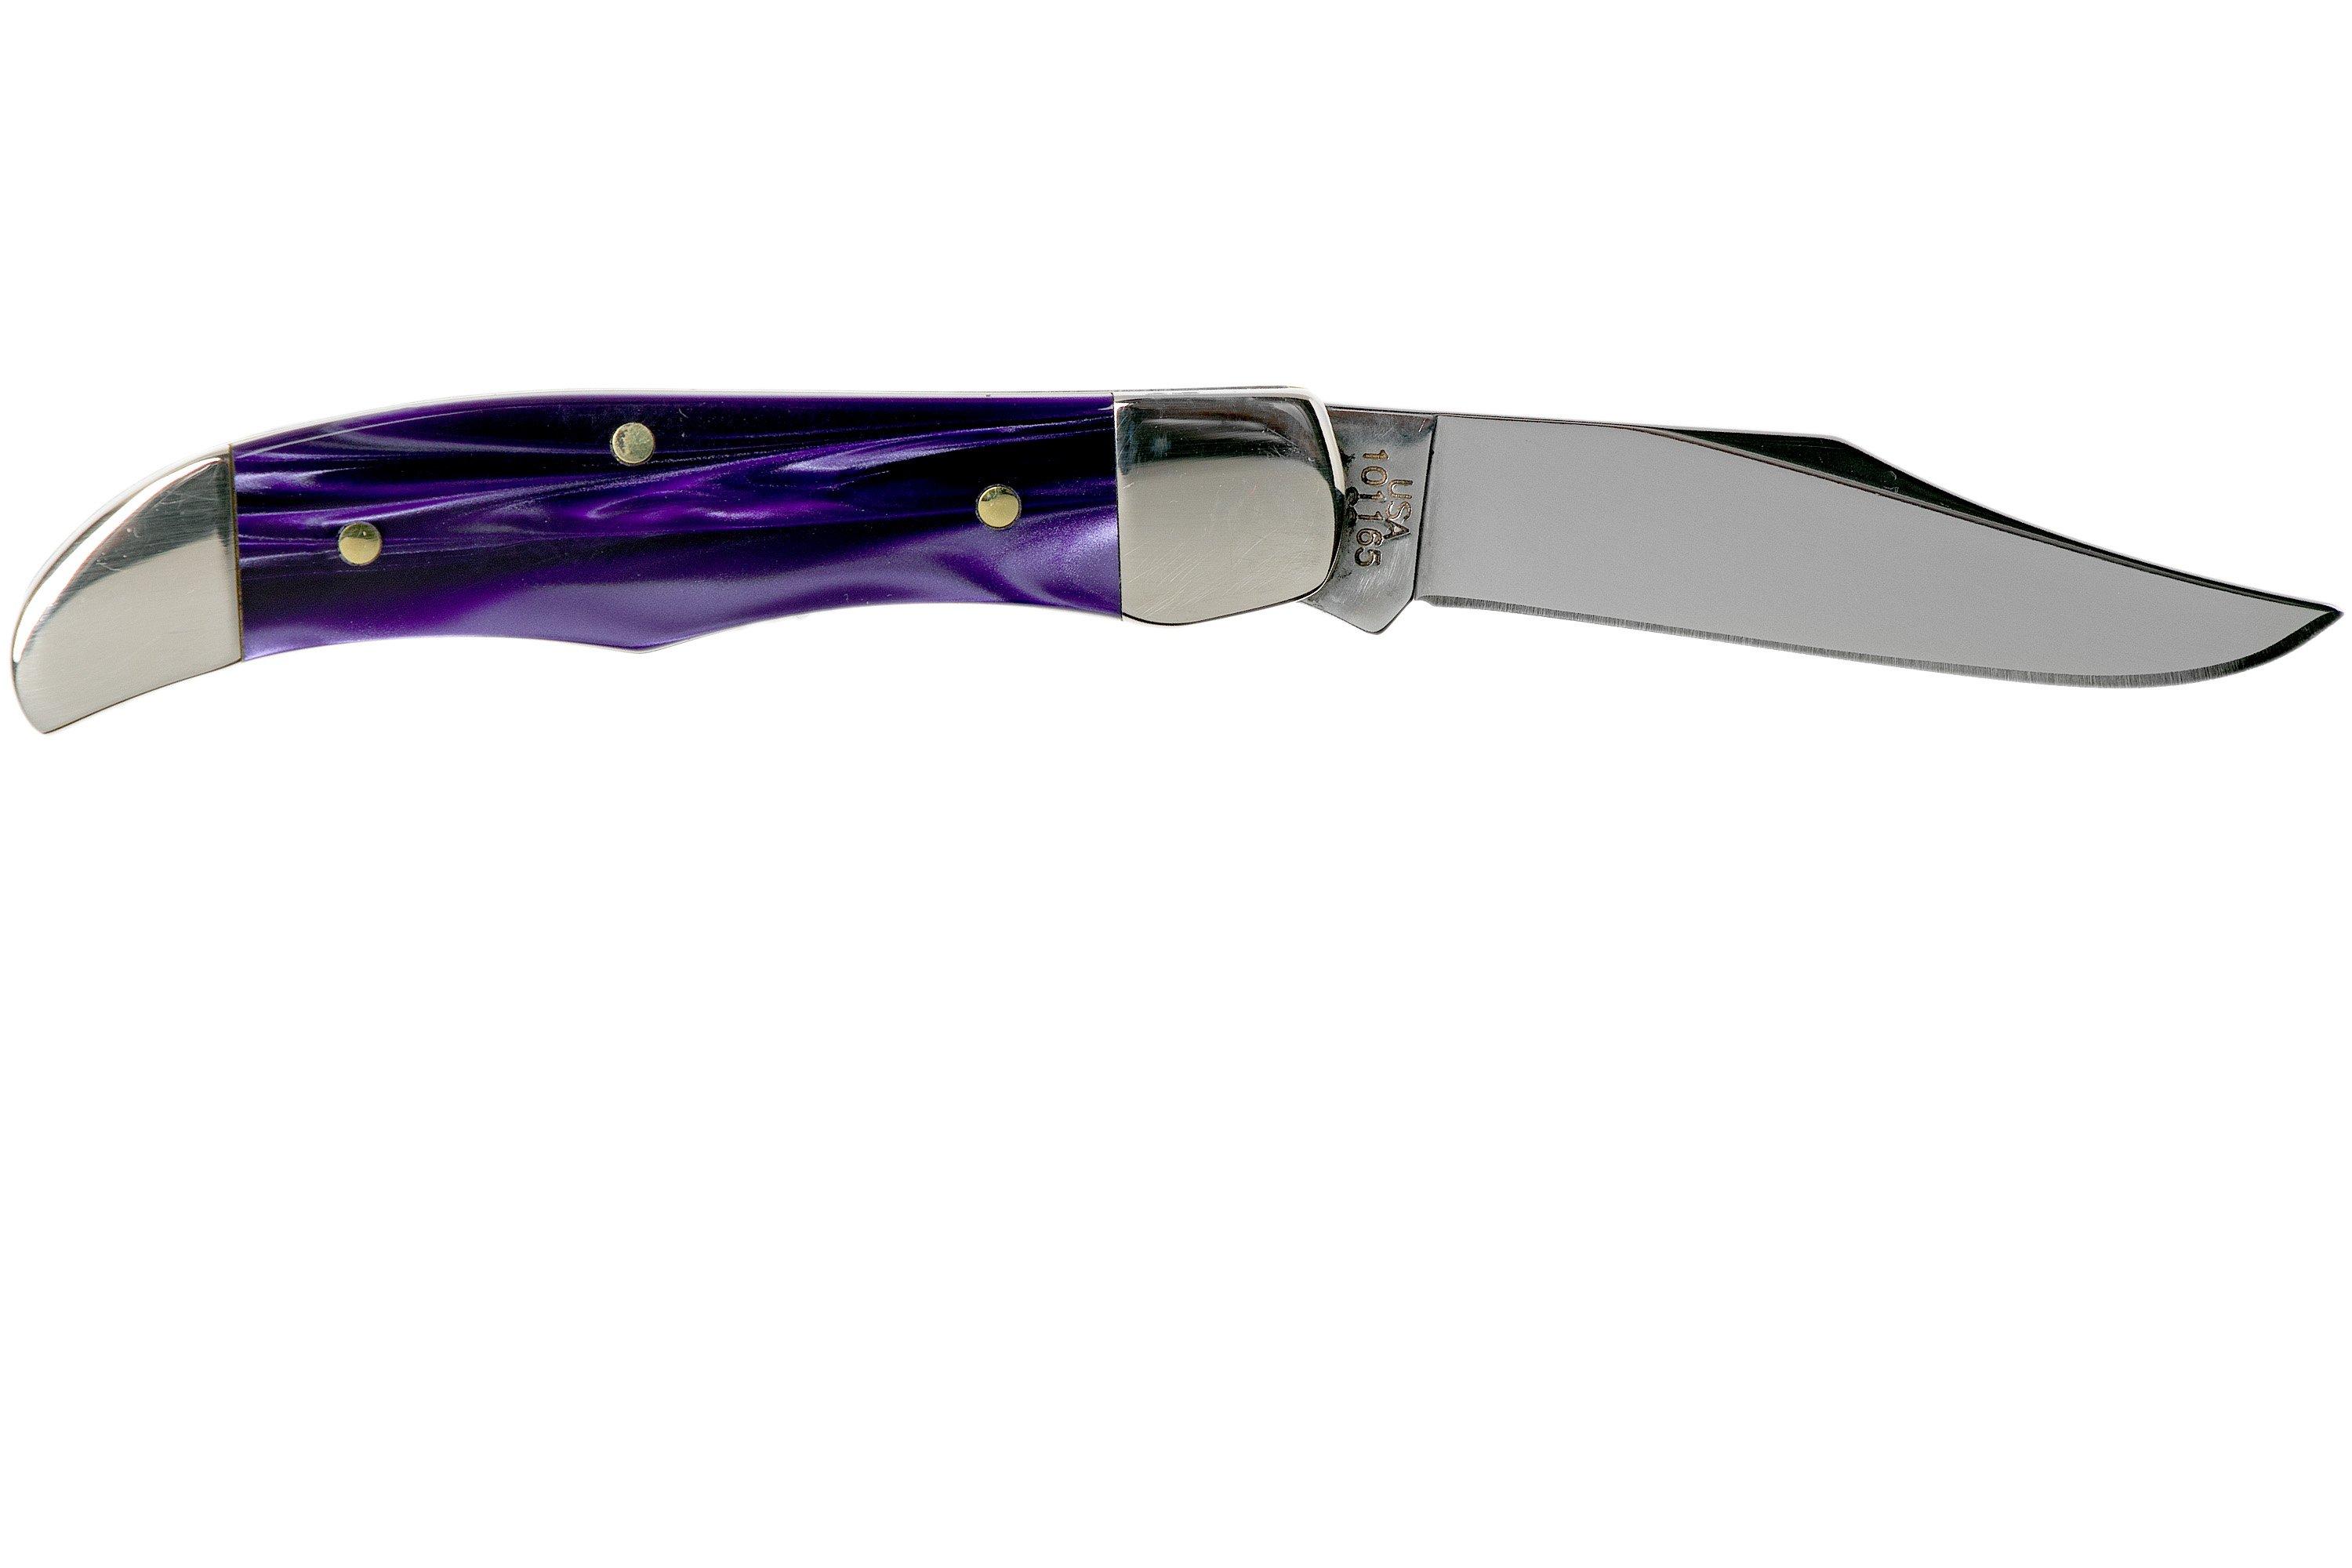 rookie Uforglemmelig Anger Case Knives Pocket Hunter Wicked Purple Smooth Kirinite, 17335, 101165 SS pocket  knife | Advantageously shopping at Knivesandtools.com